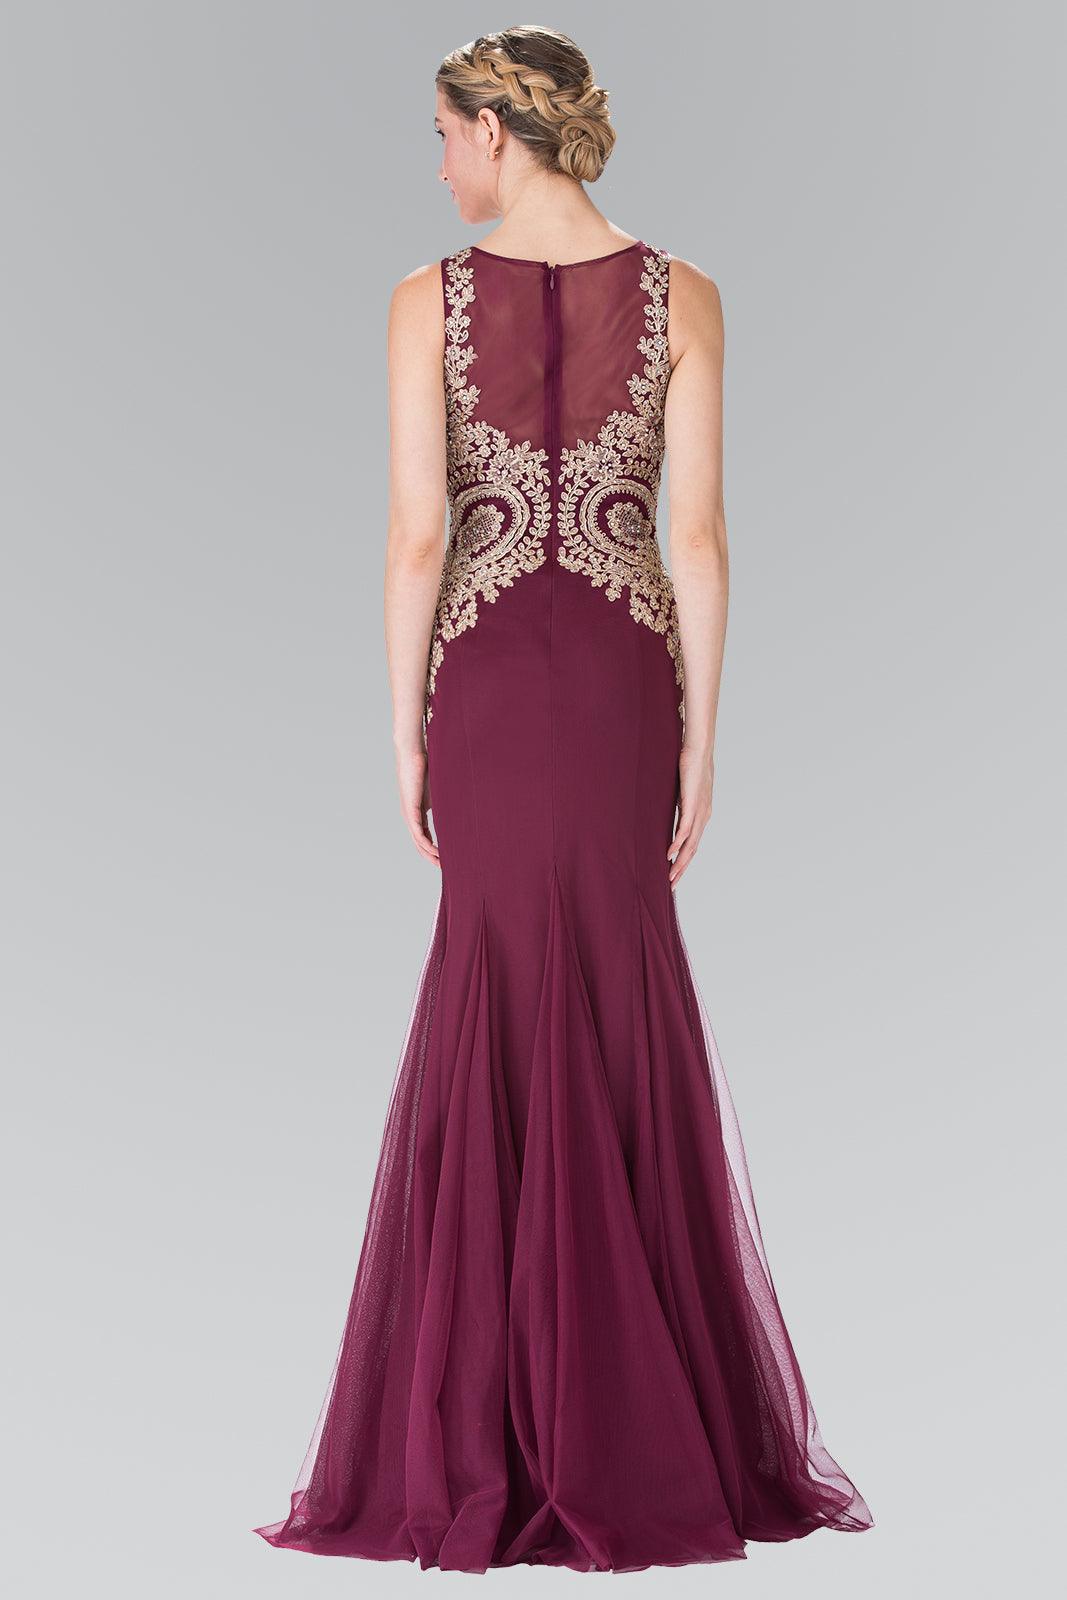 Embroidered Boidce Long Prom Dress with Sheer Back - The Dress Outlet Elizabeth K